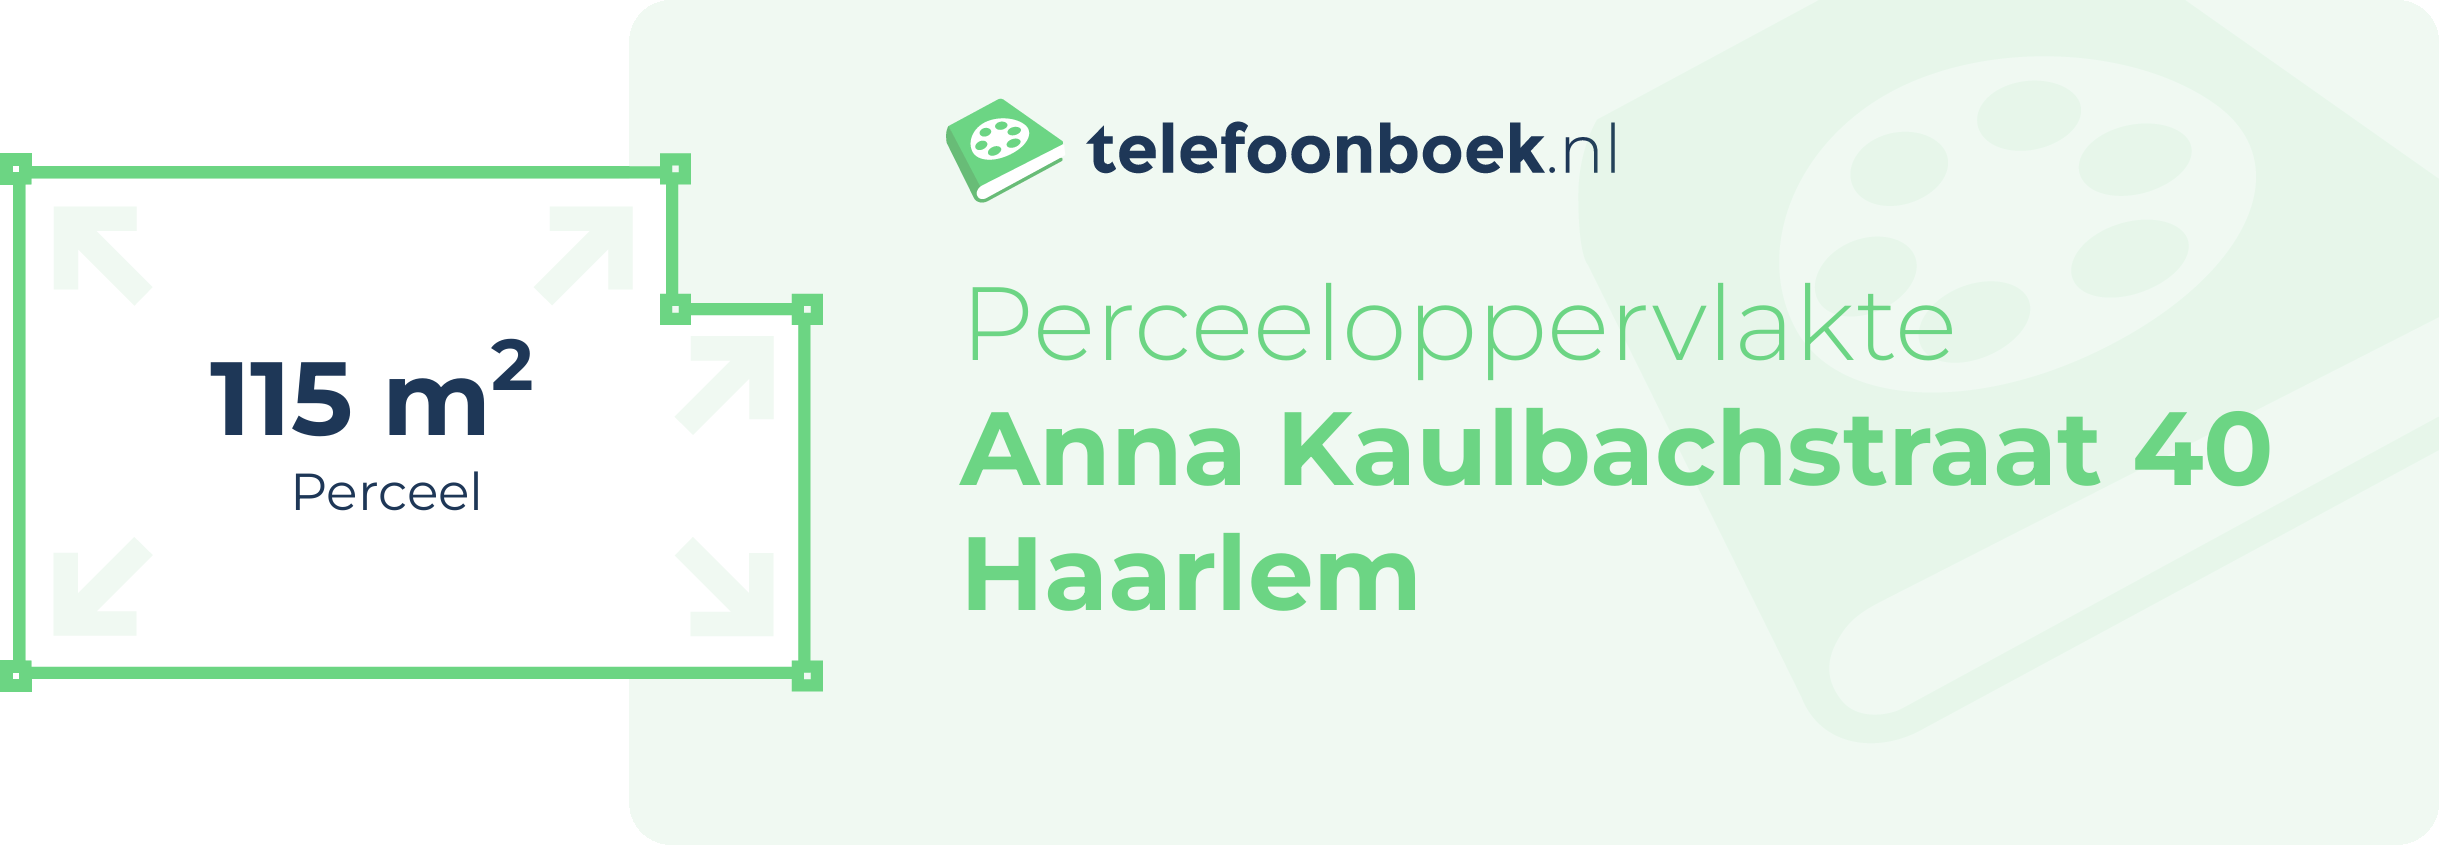 Perceeloppervlakte Anna Kaulbachstraat 40 Haarlem